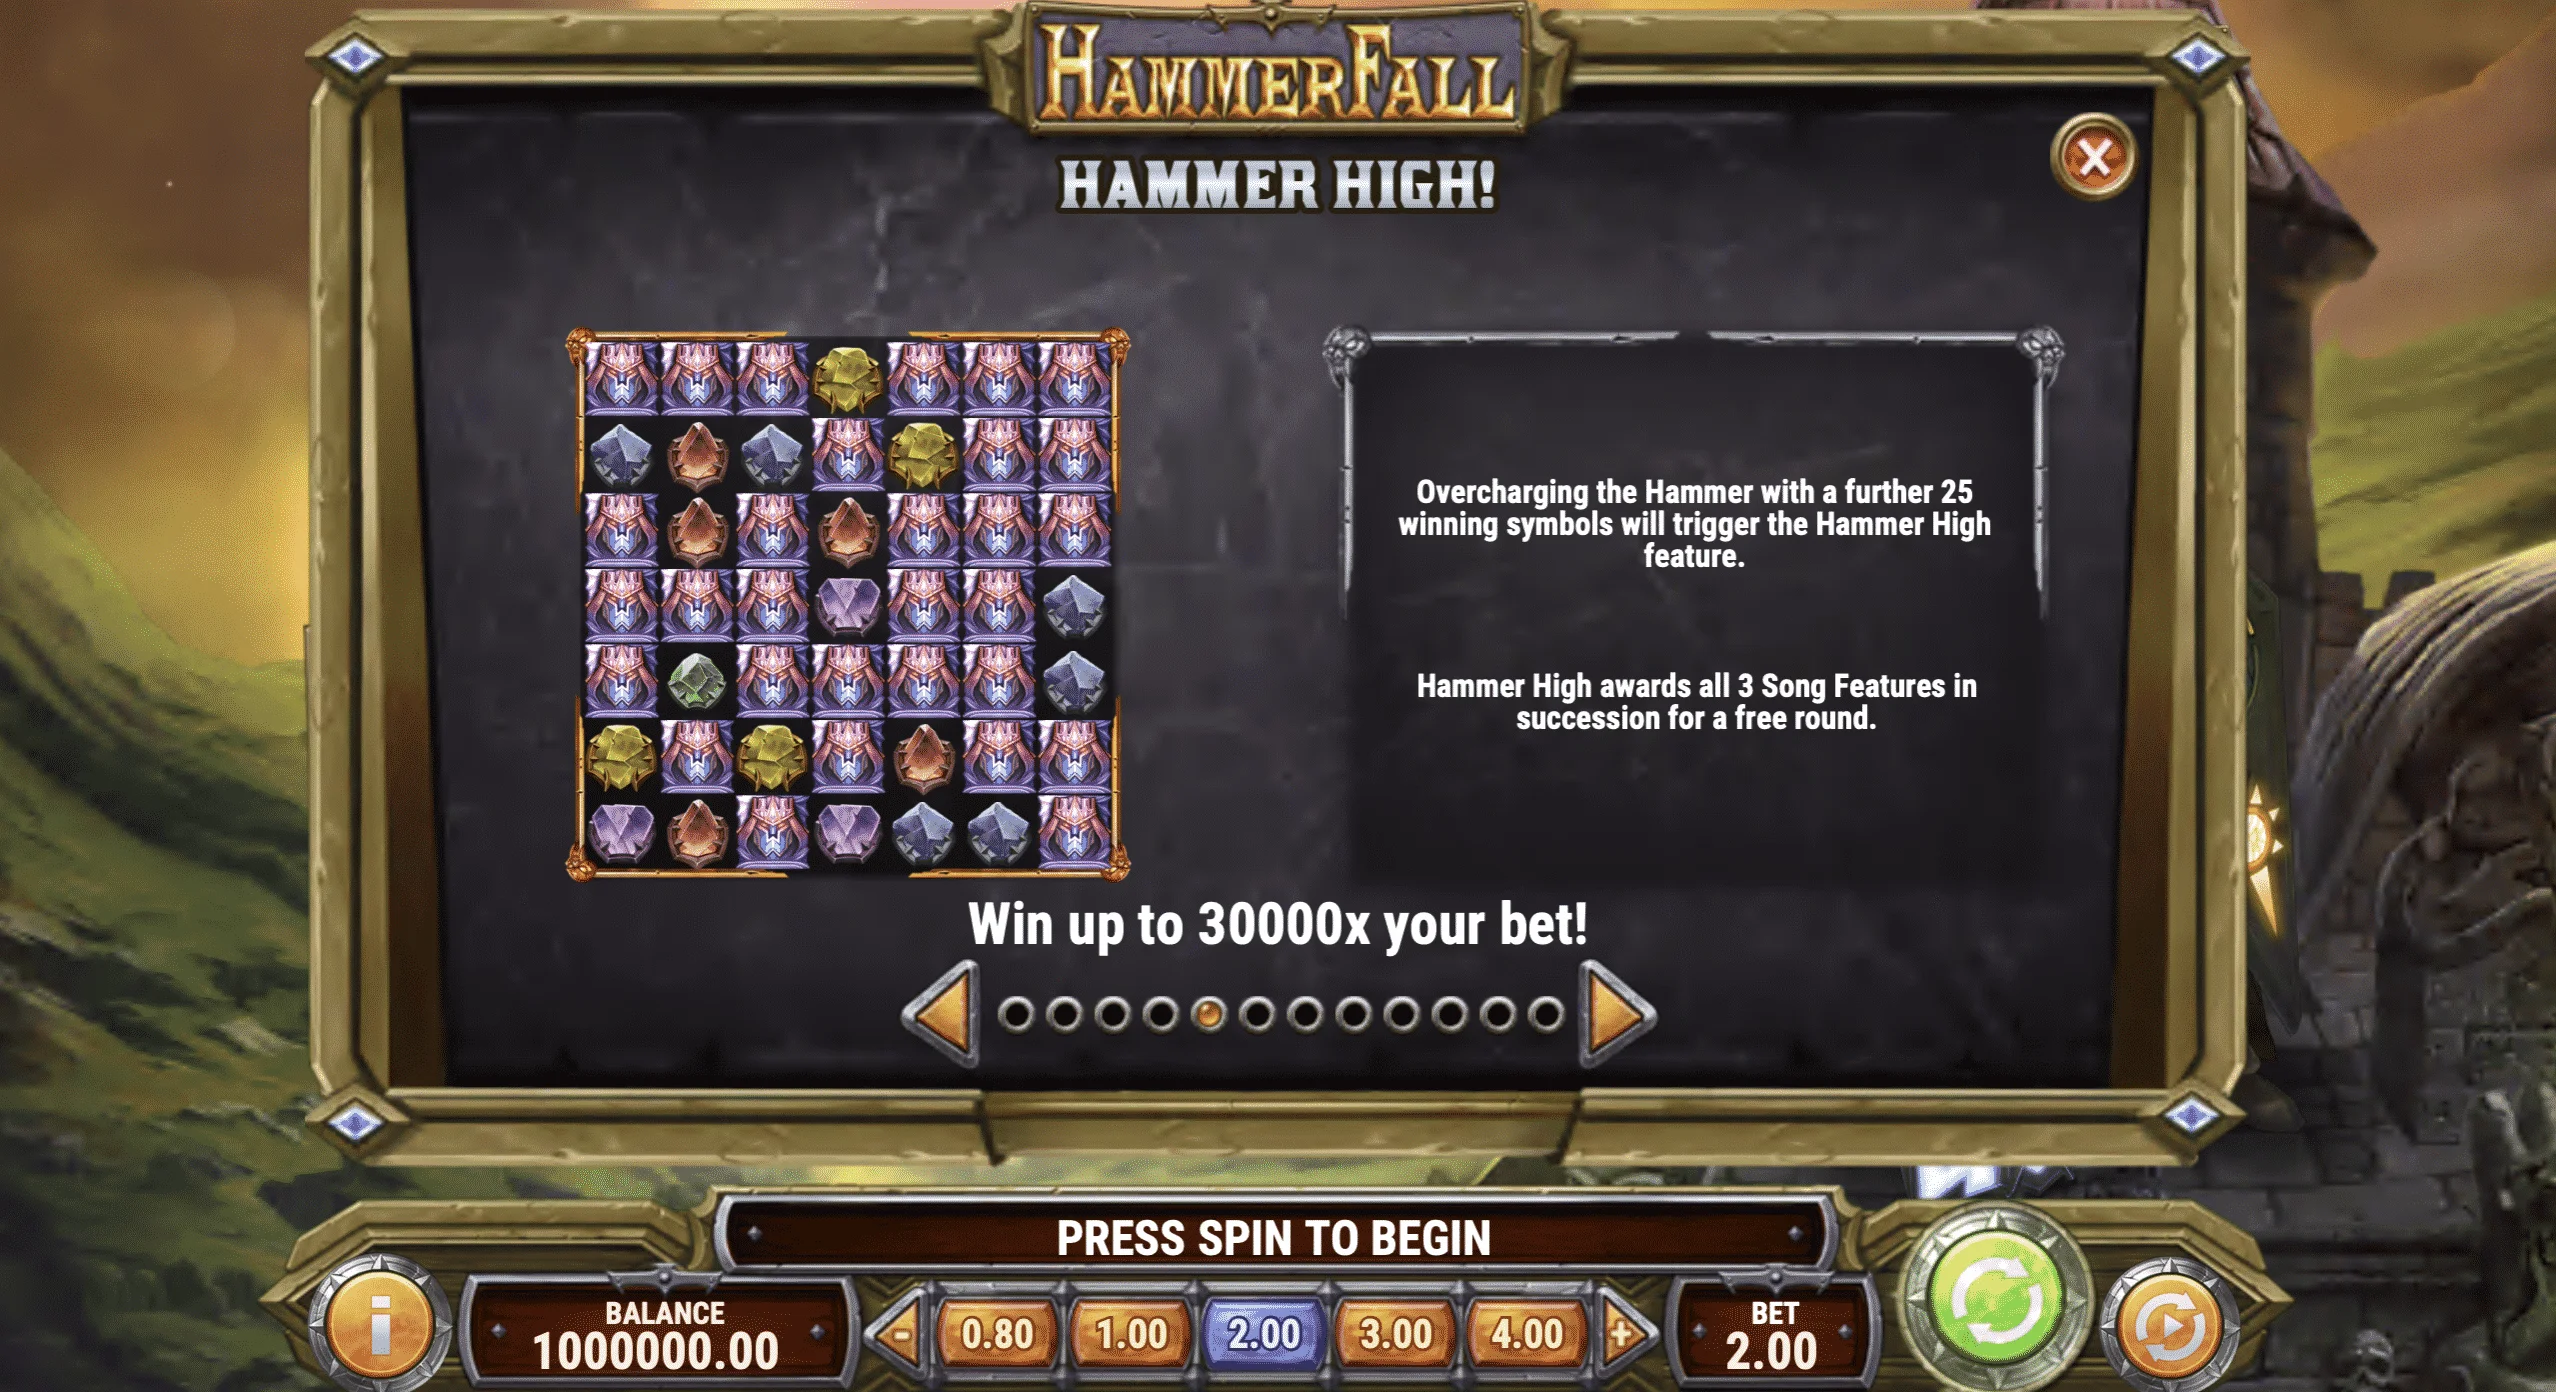 HammerFall Bonus